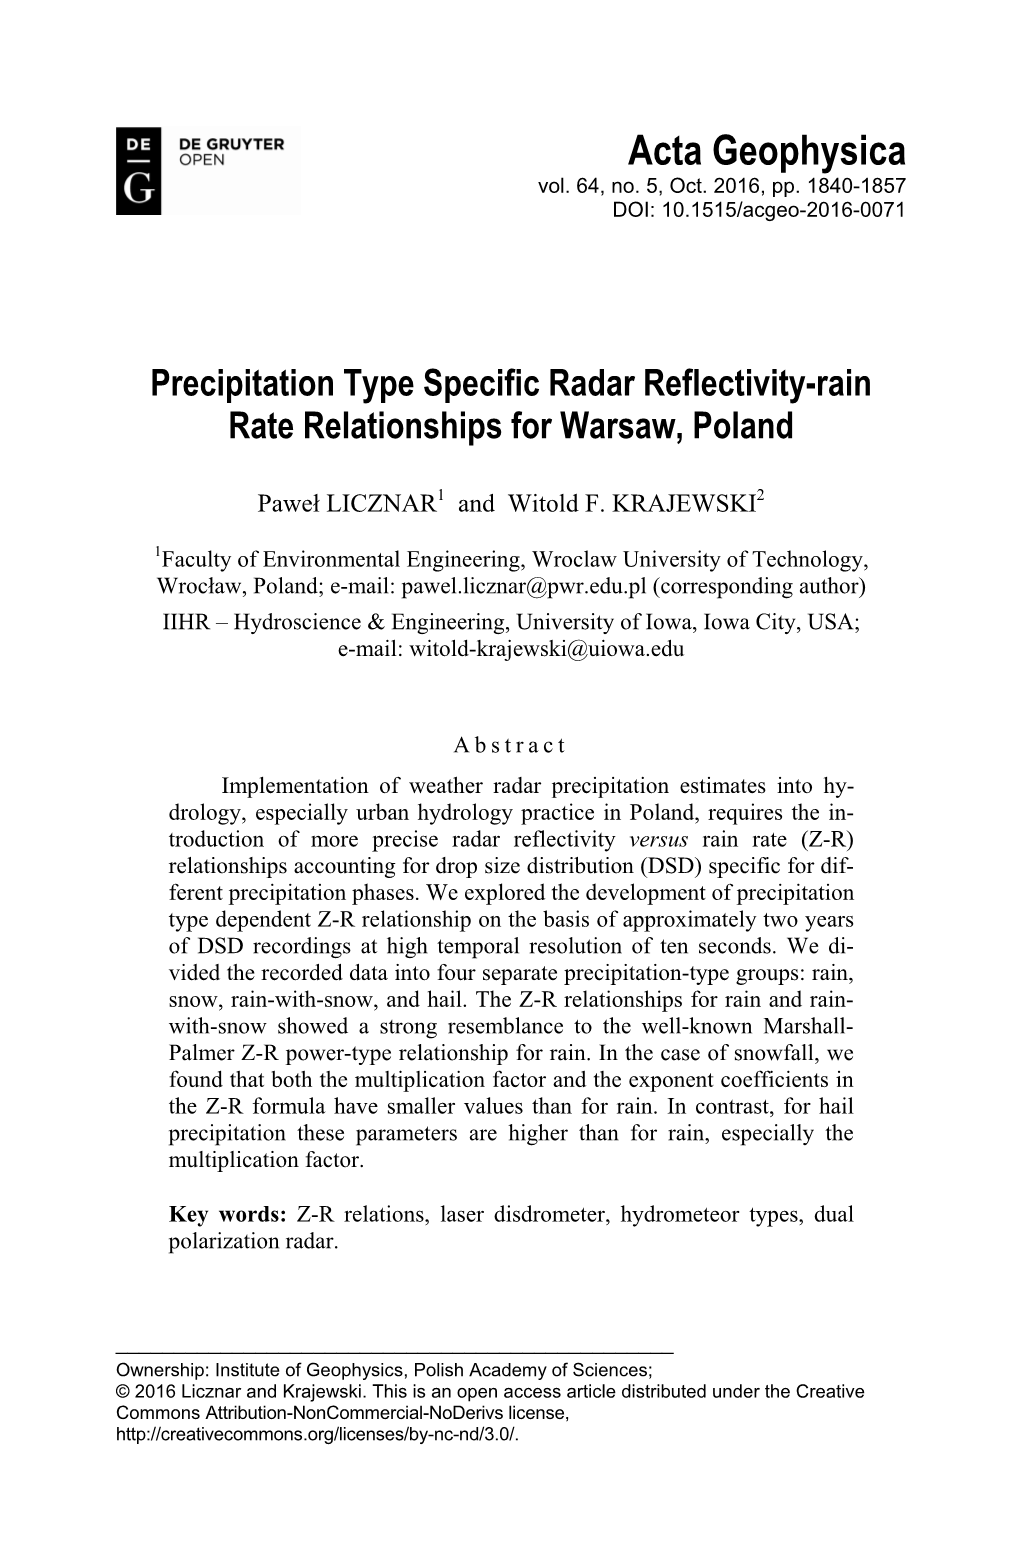 Precipitation Type Specific Radar Reflectivity-Rain Rate Relationships for Warsaw, Poland